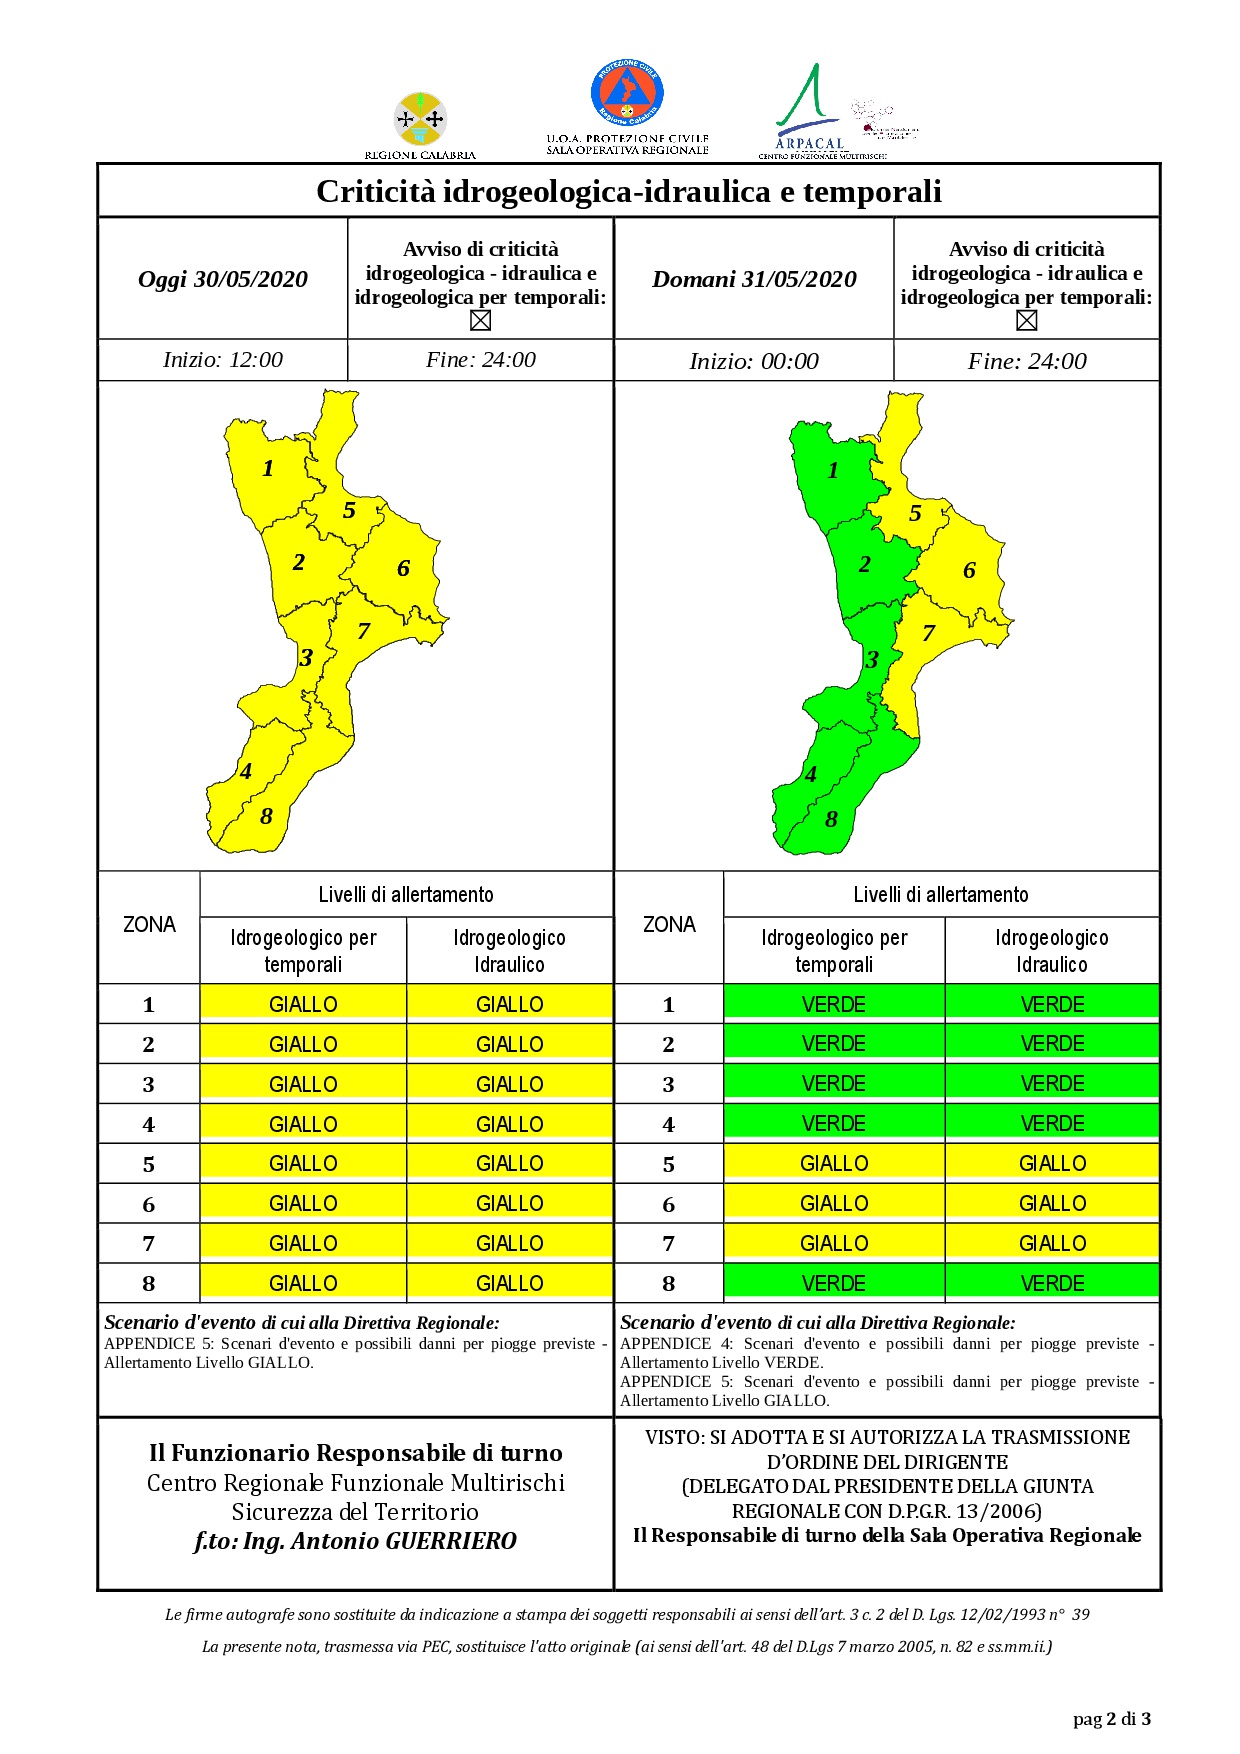 Criticità idrogeologica-idraulica e temporali in Calabria 30-05-2020